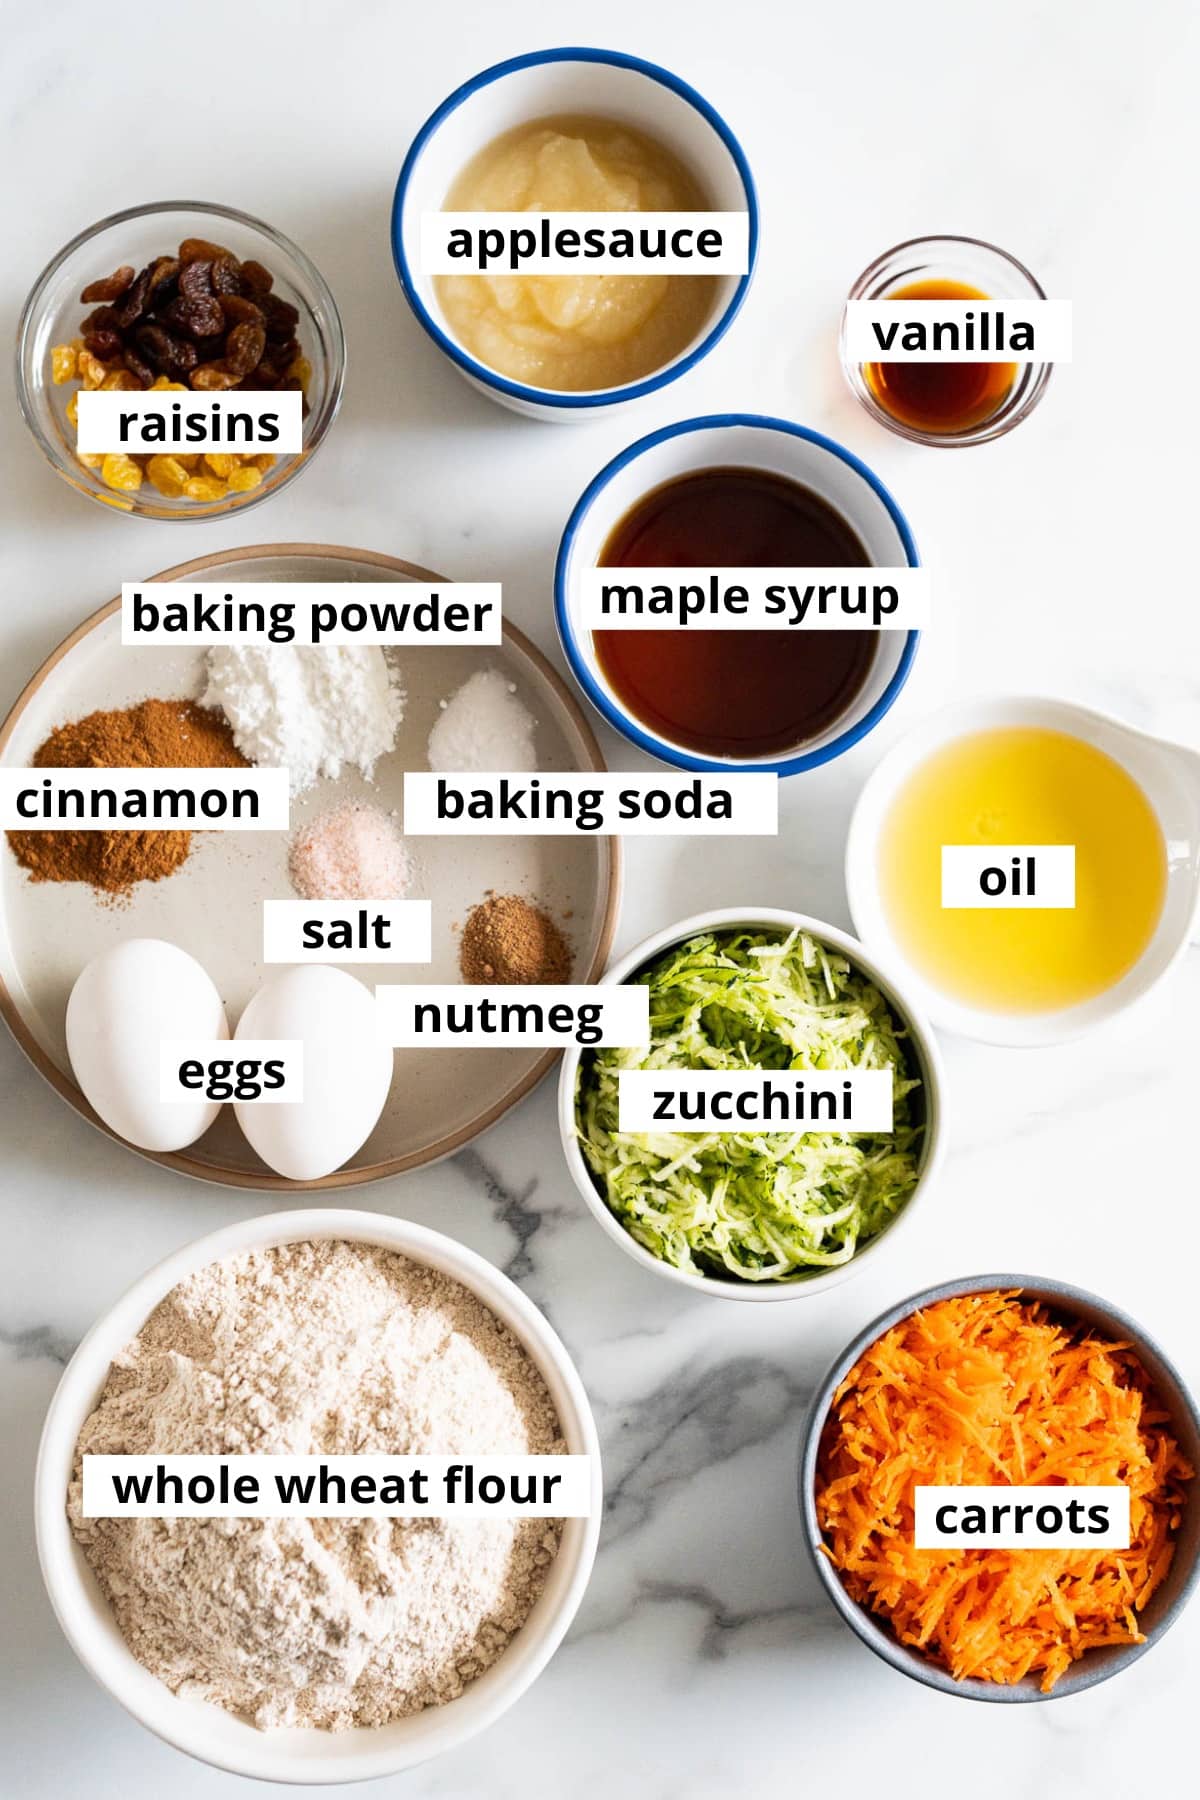 Applesauce, vanilla, raisins, maple syrup, baking powder, baking soda, cinnamon, salt, nutmeg, eggs, zucchini, oil, whole wheat flour, carrots.